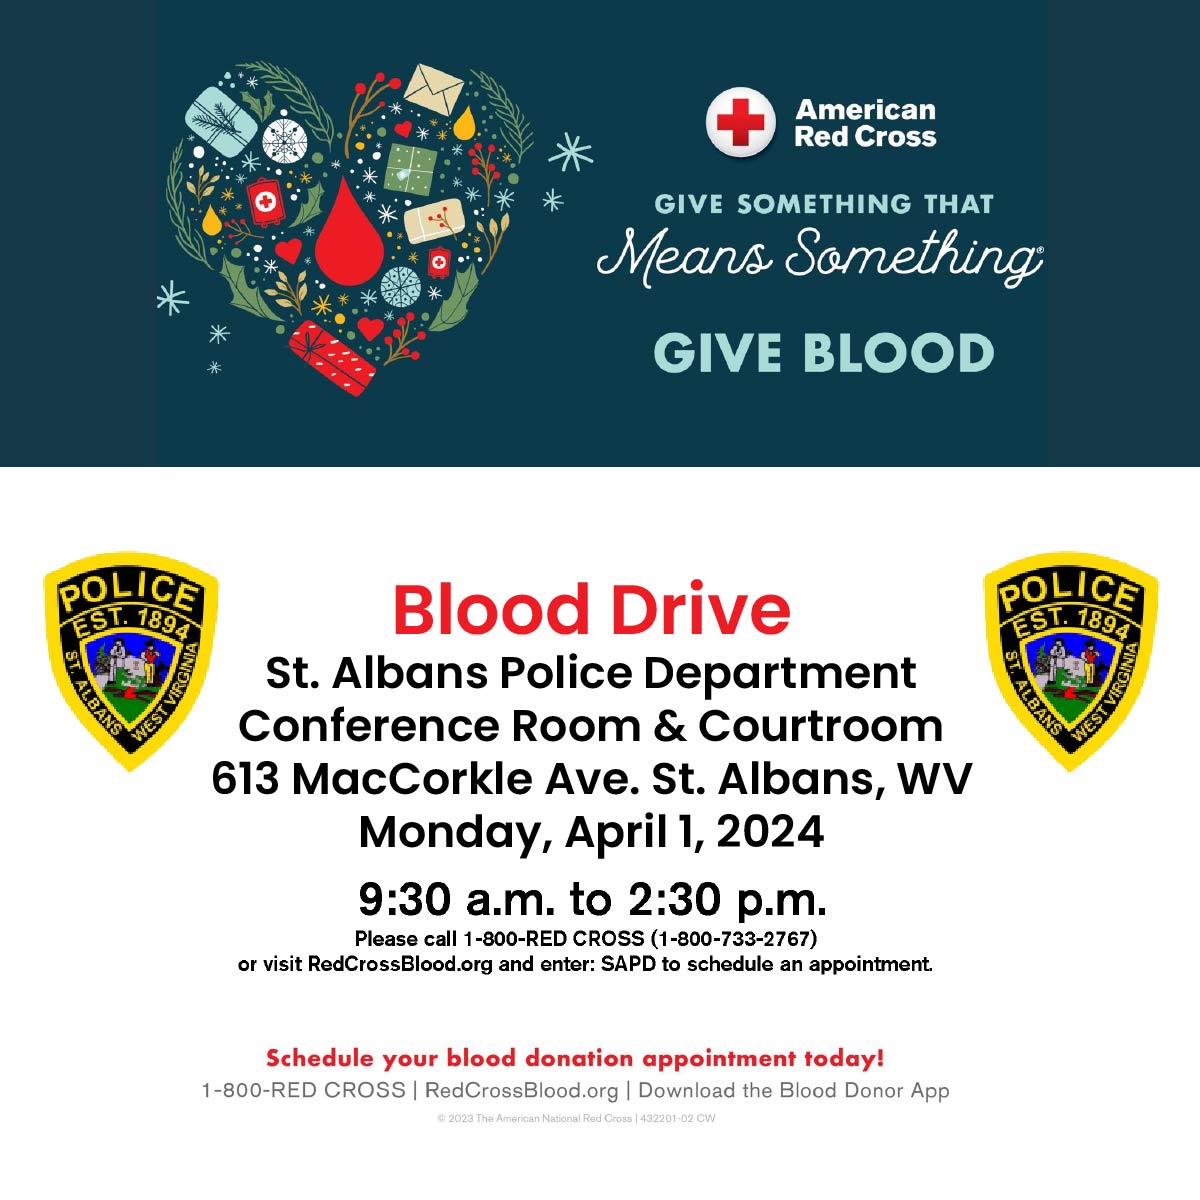 Red Cross Blood Drive St. Albans WV - April 1, 2024 - SAPD